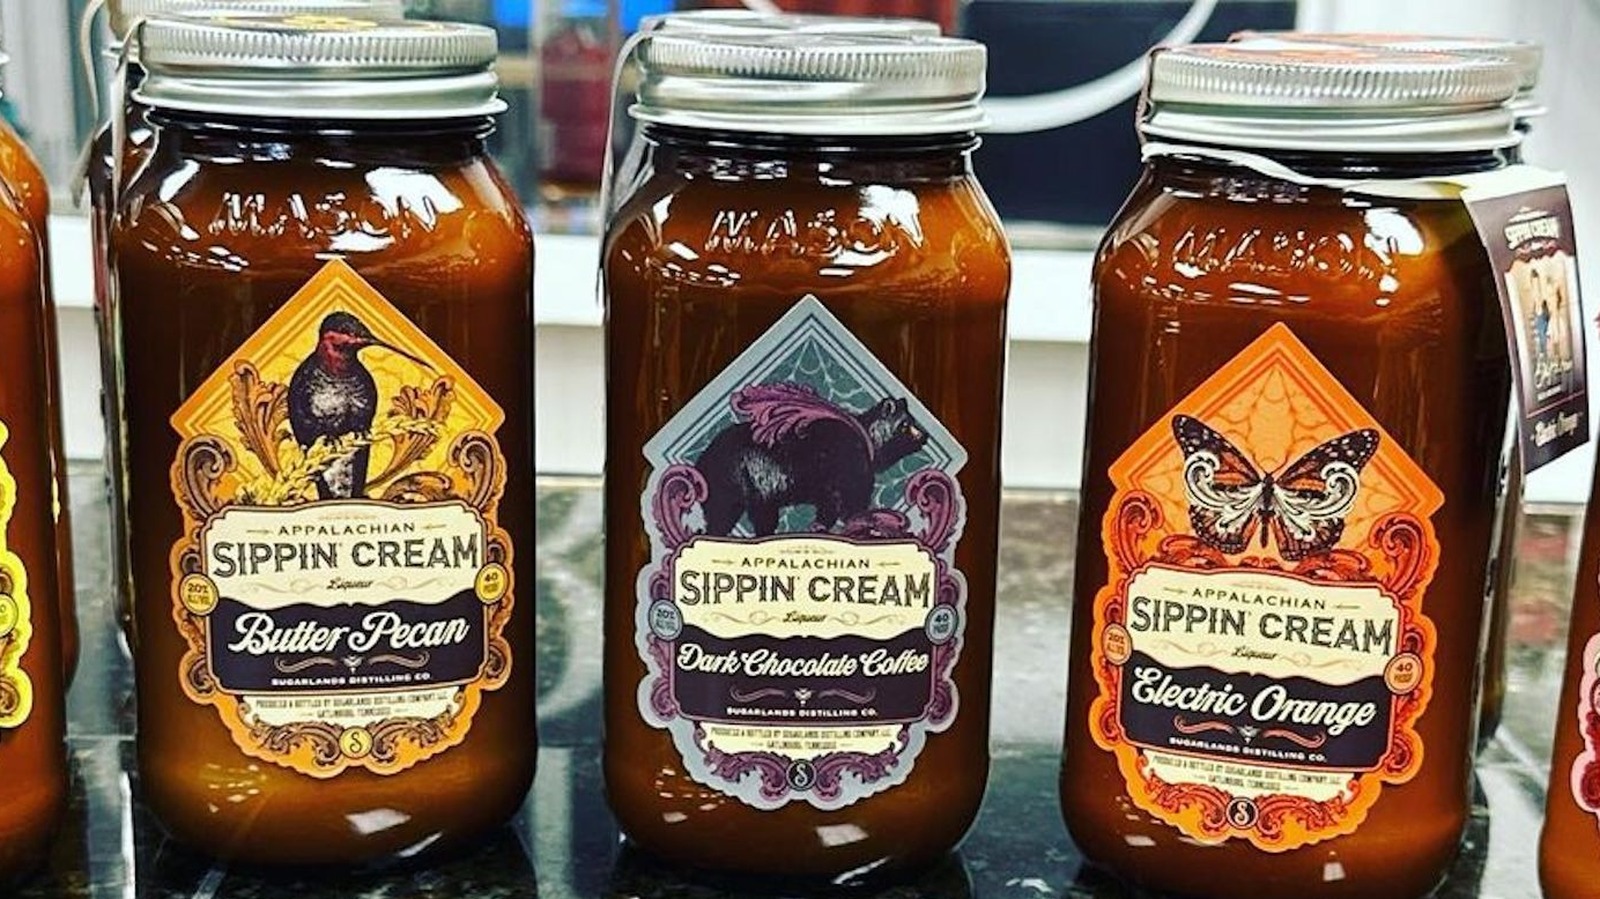 The Best Boozy Coffee Creamer Is Appalachian Sippin' Cream - Eater